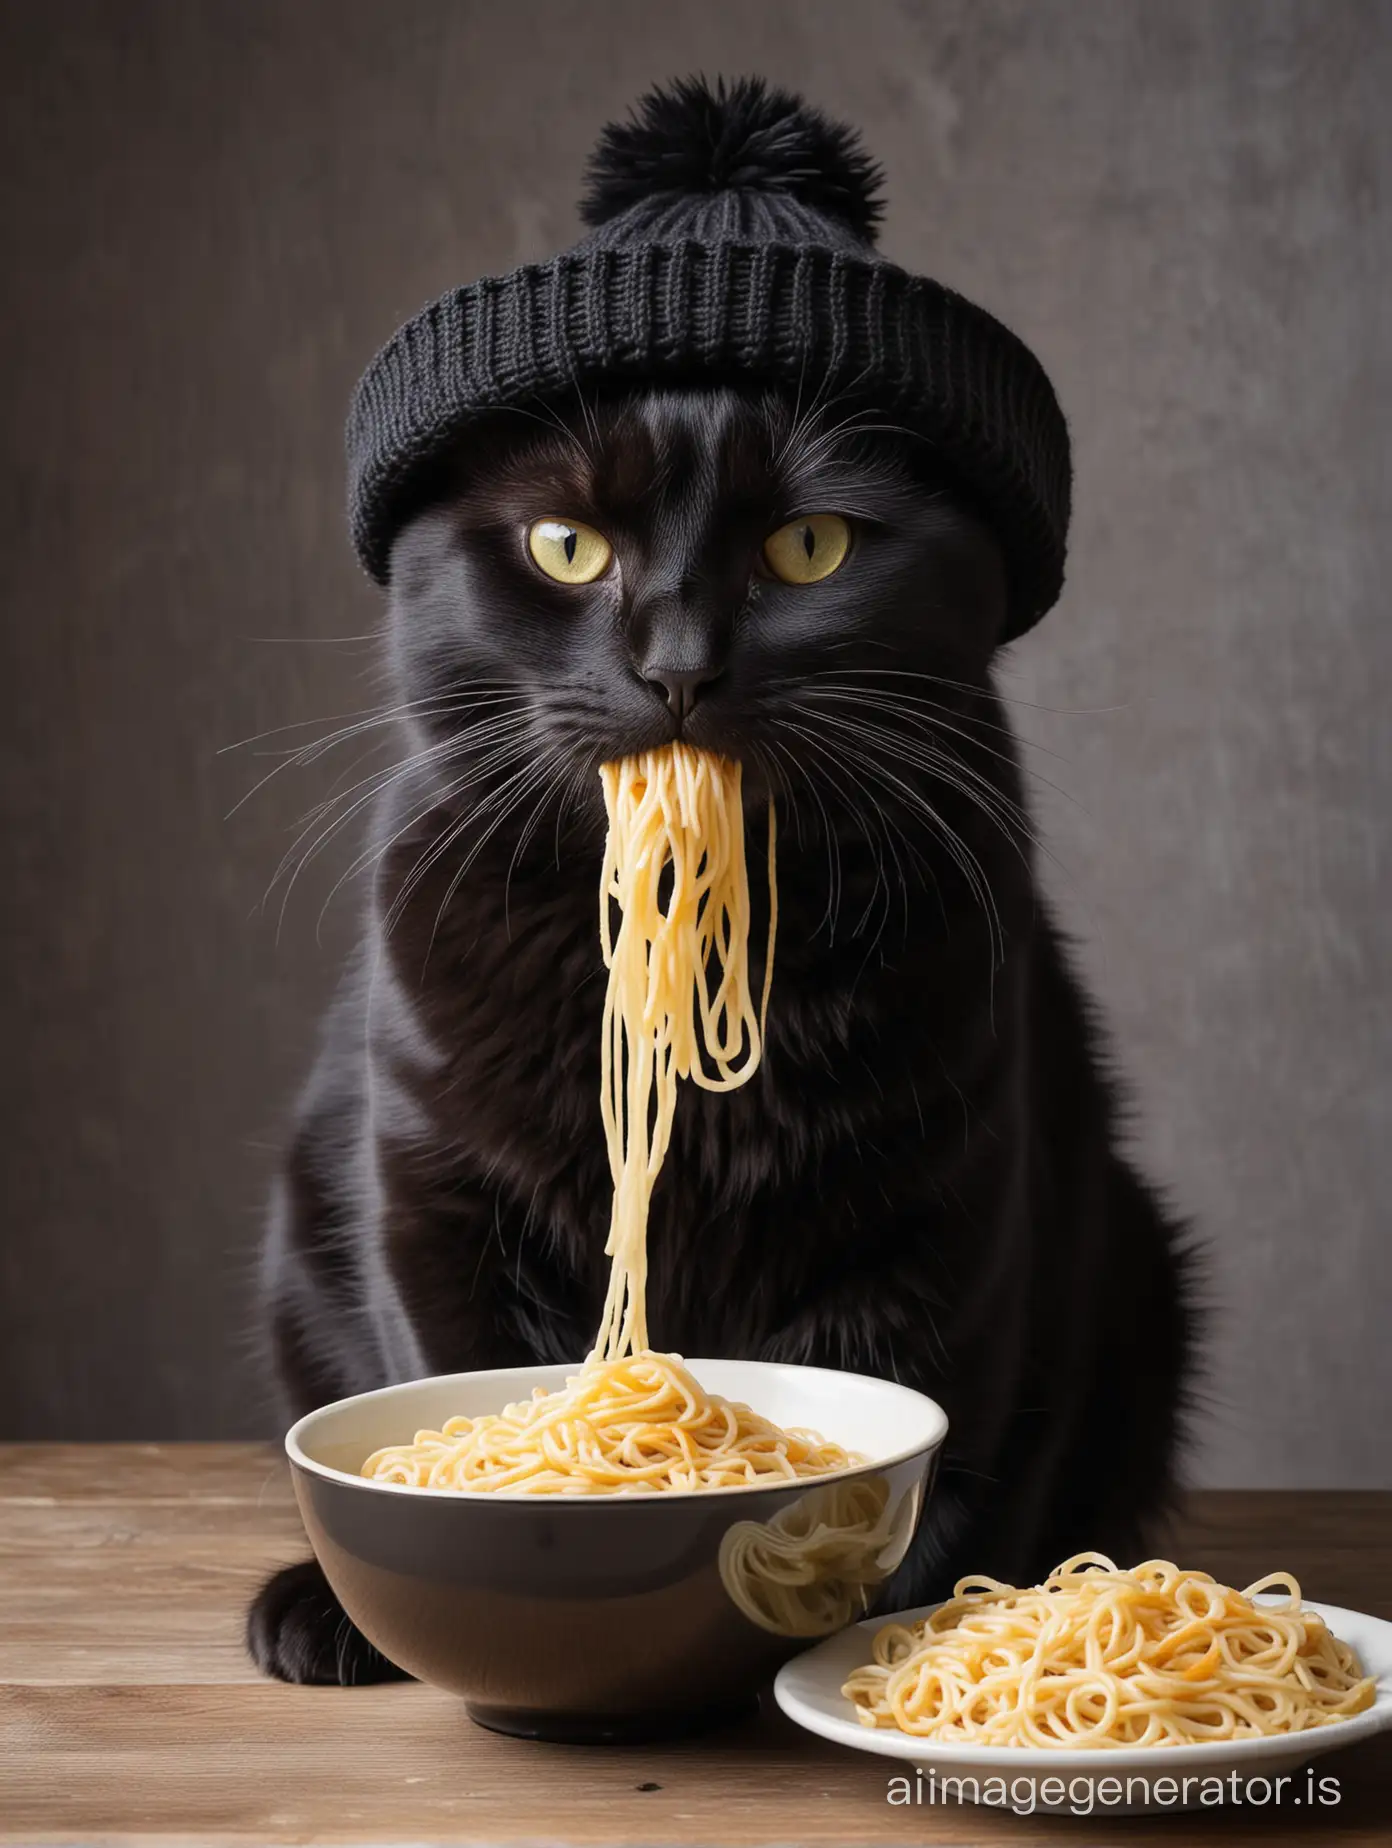 Adorable-Black-Cat-in-HandKnit-Cap-Enjoying-Noodles